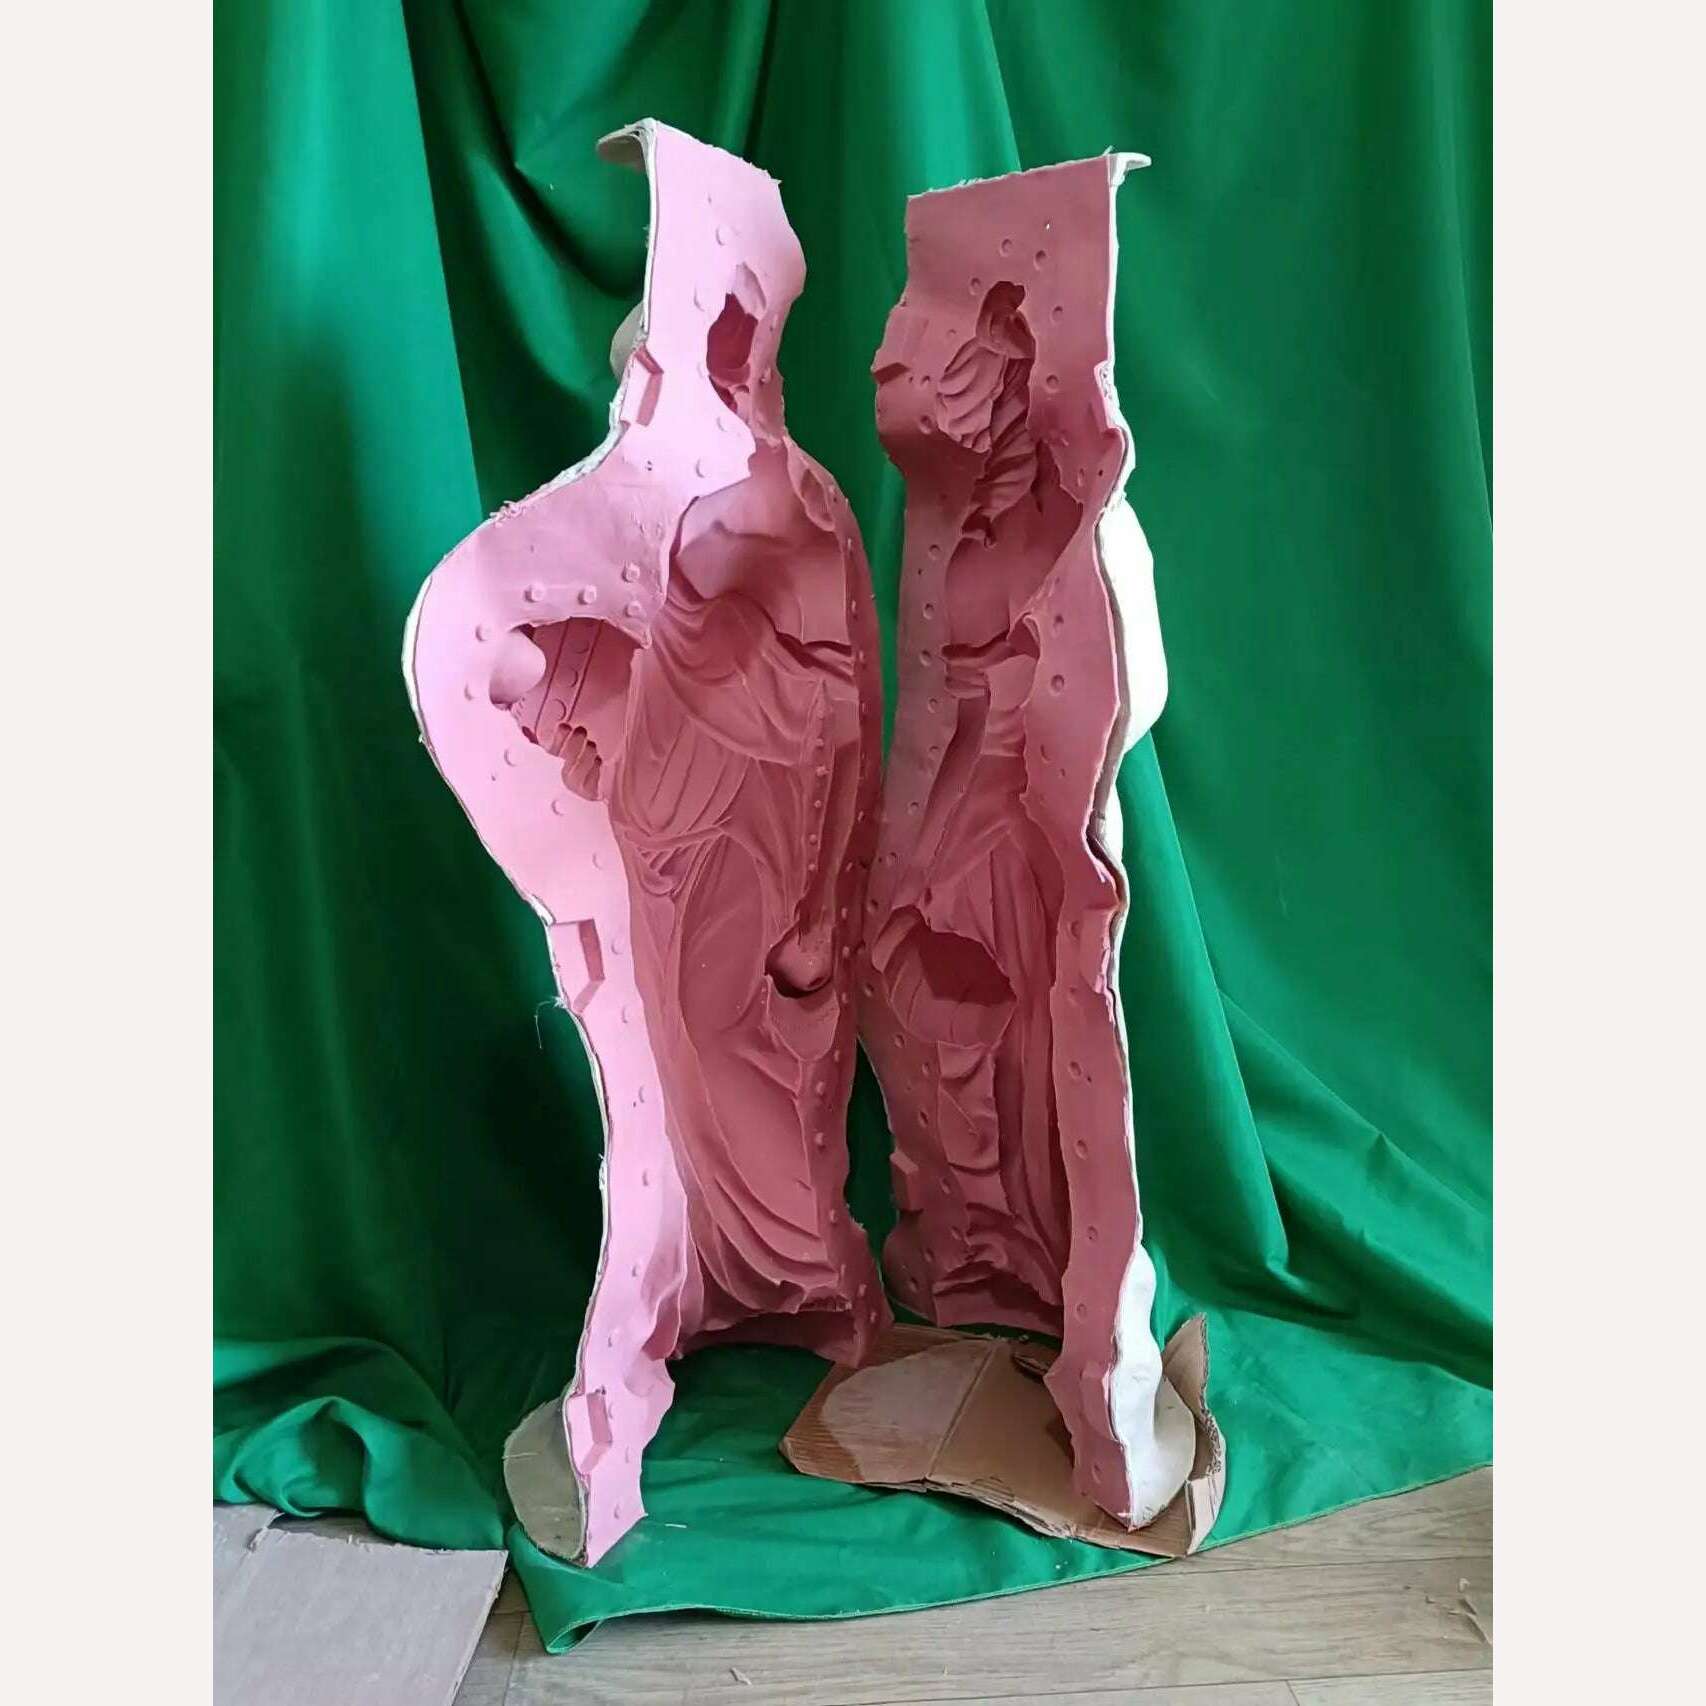 KIMLUD, Reazone Maid Sculpture Moule, KIMLUD Women's Clothes